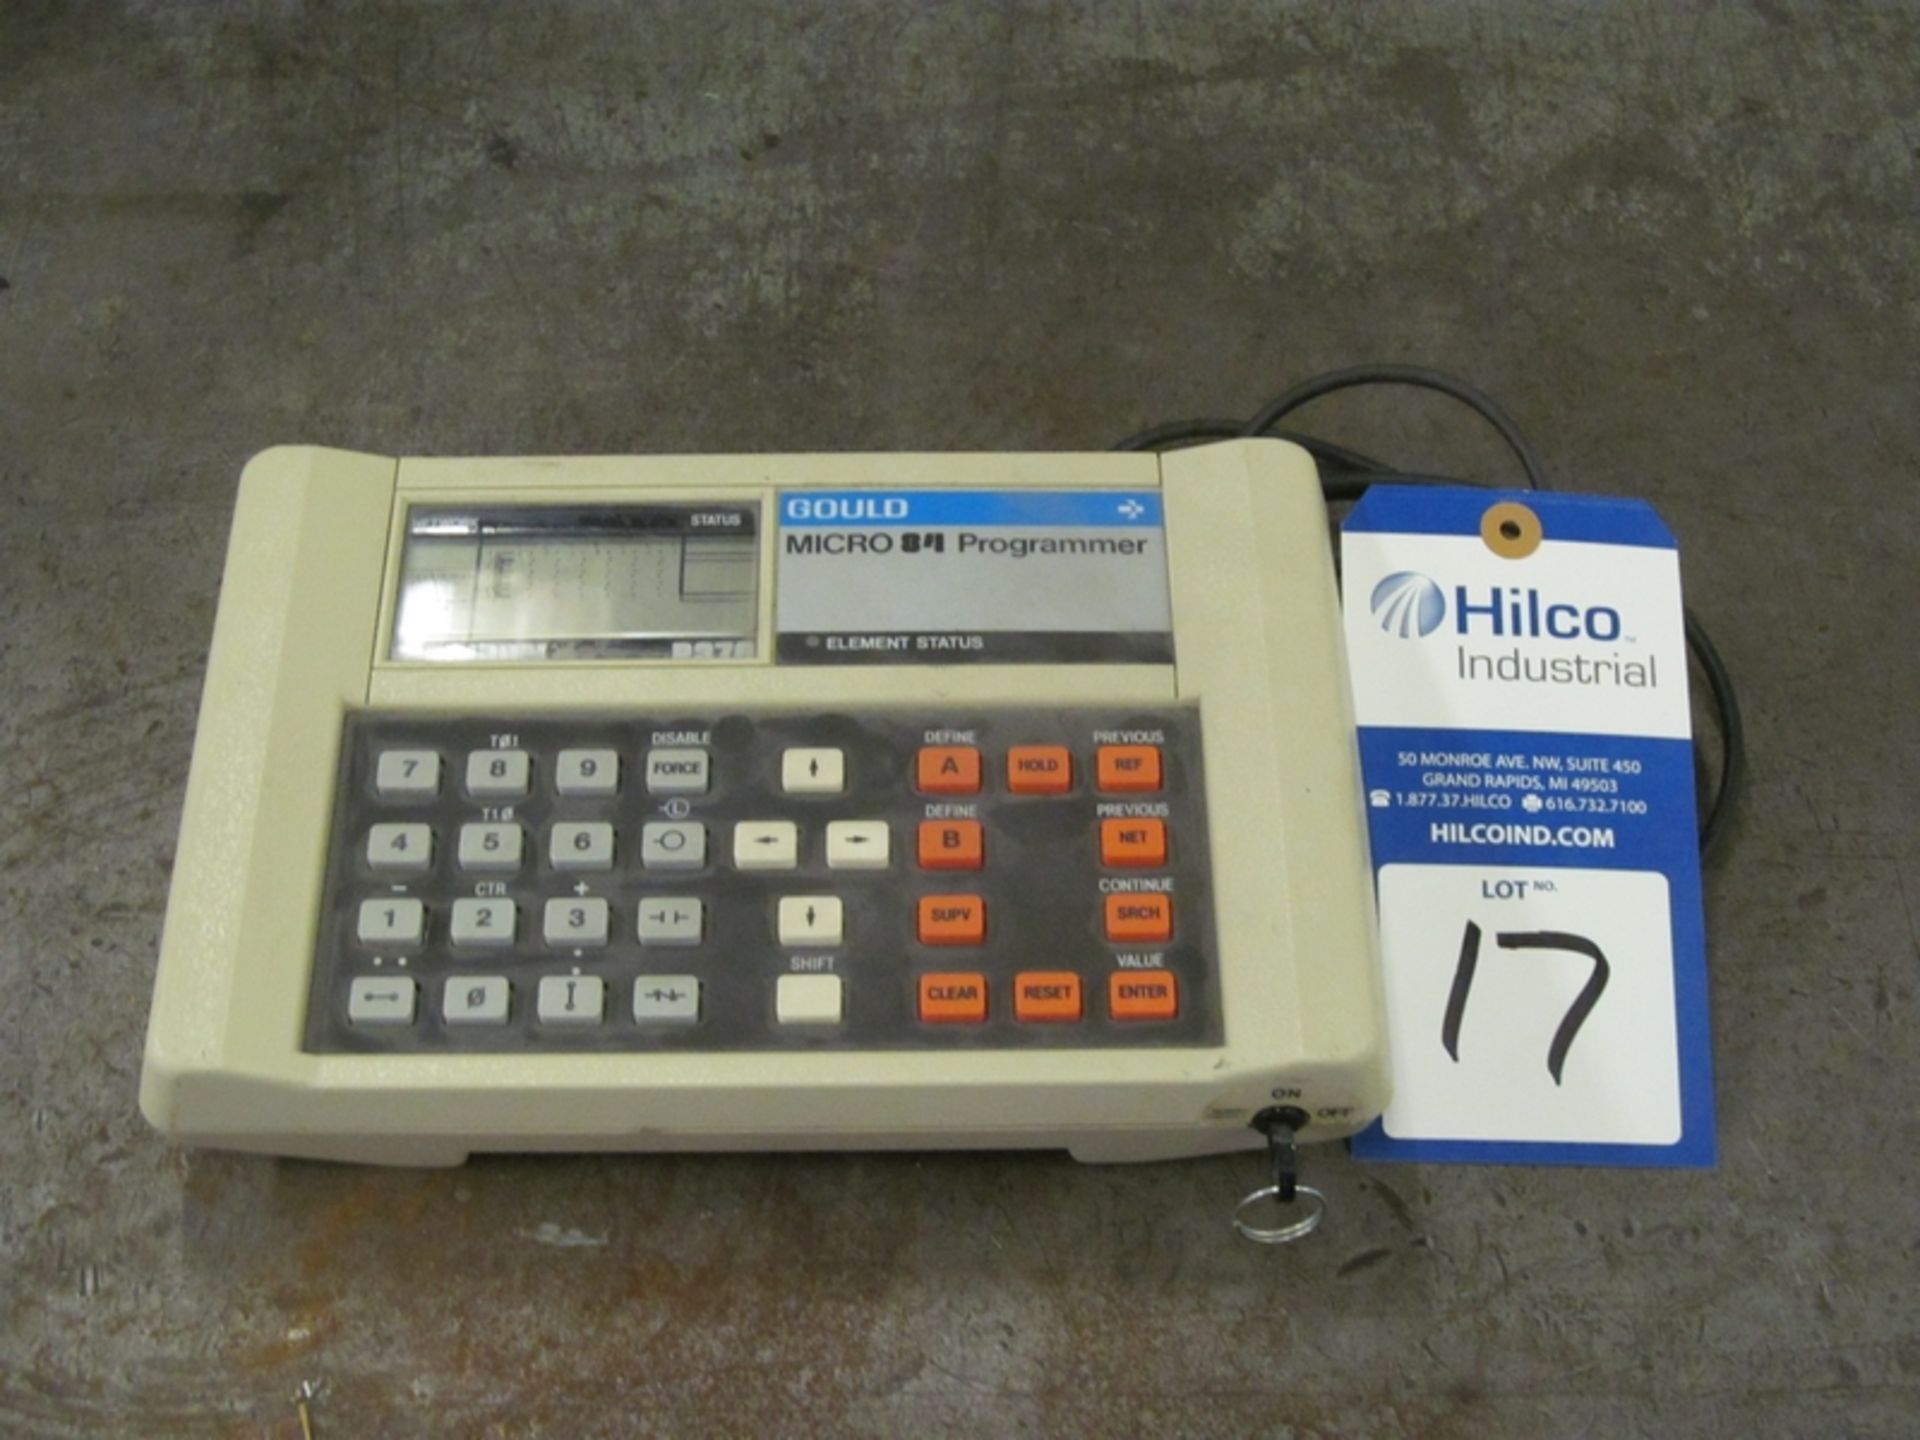 Gould Model Micro 84 Programmer